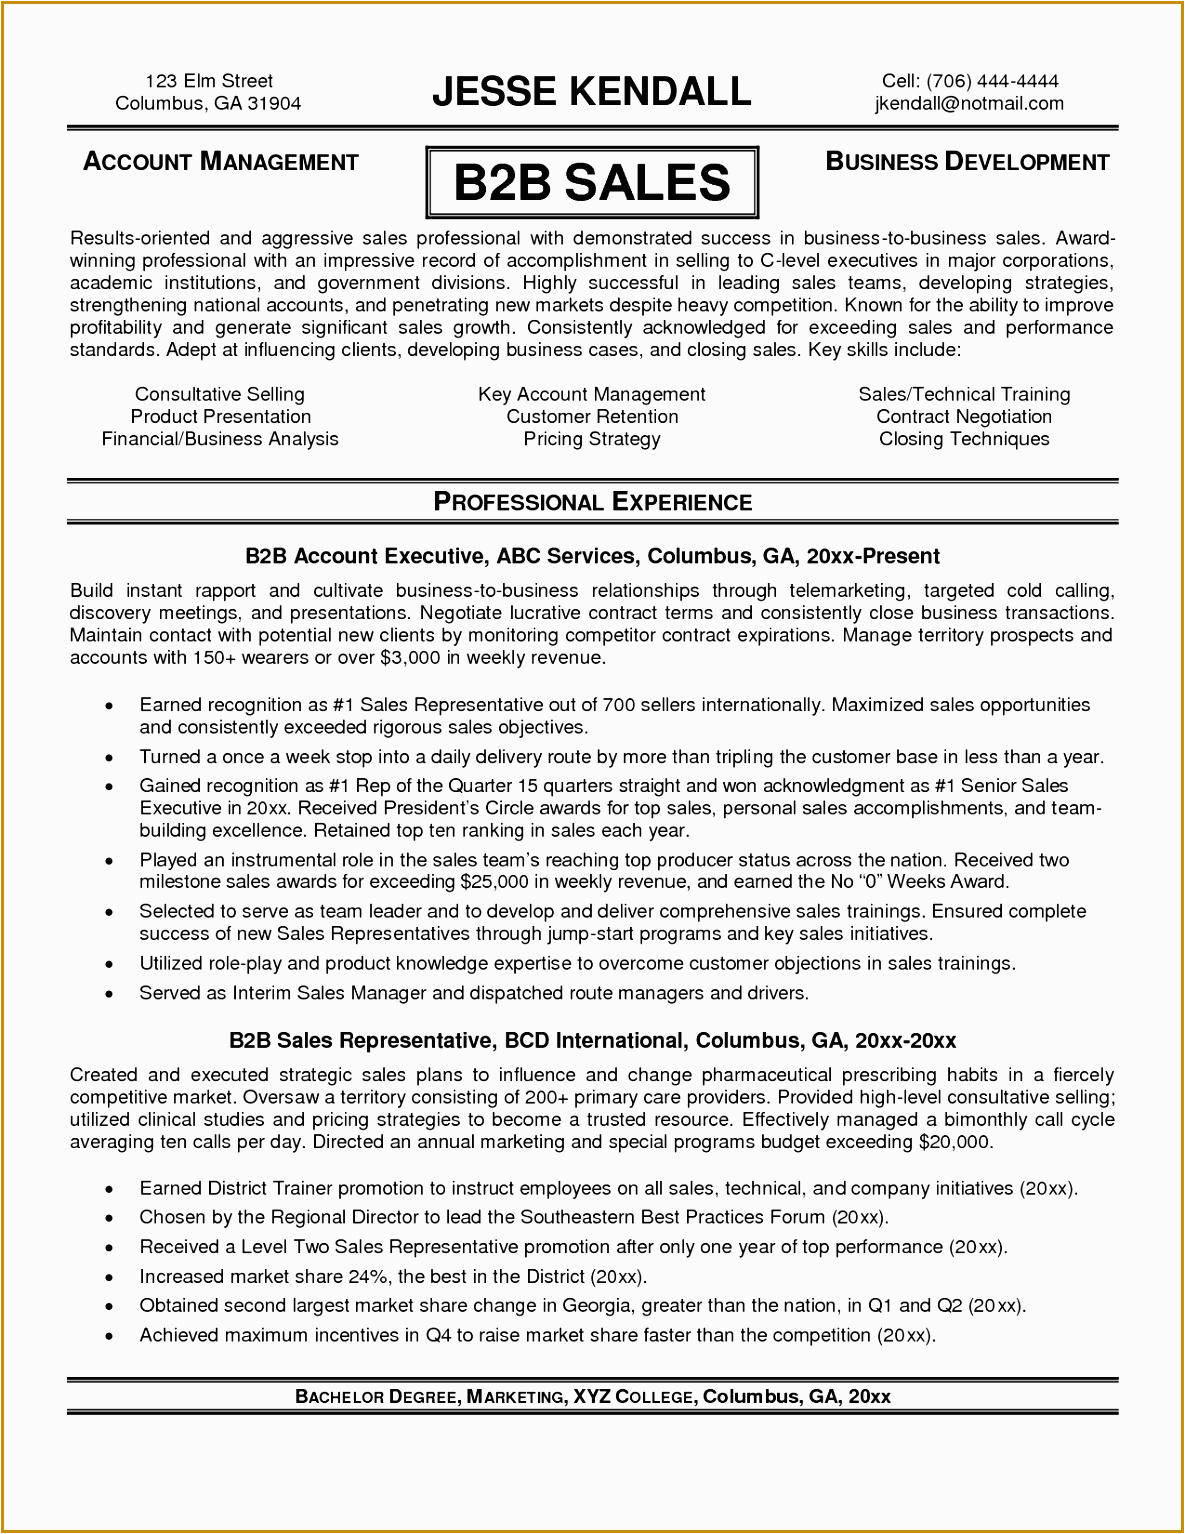 Sales and Marketing Resume Sample Pdf 5 Sales and Marketing Manager Job Description Pdf